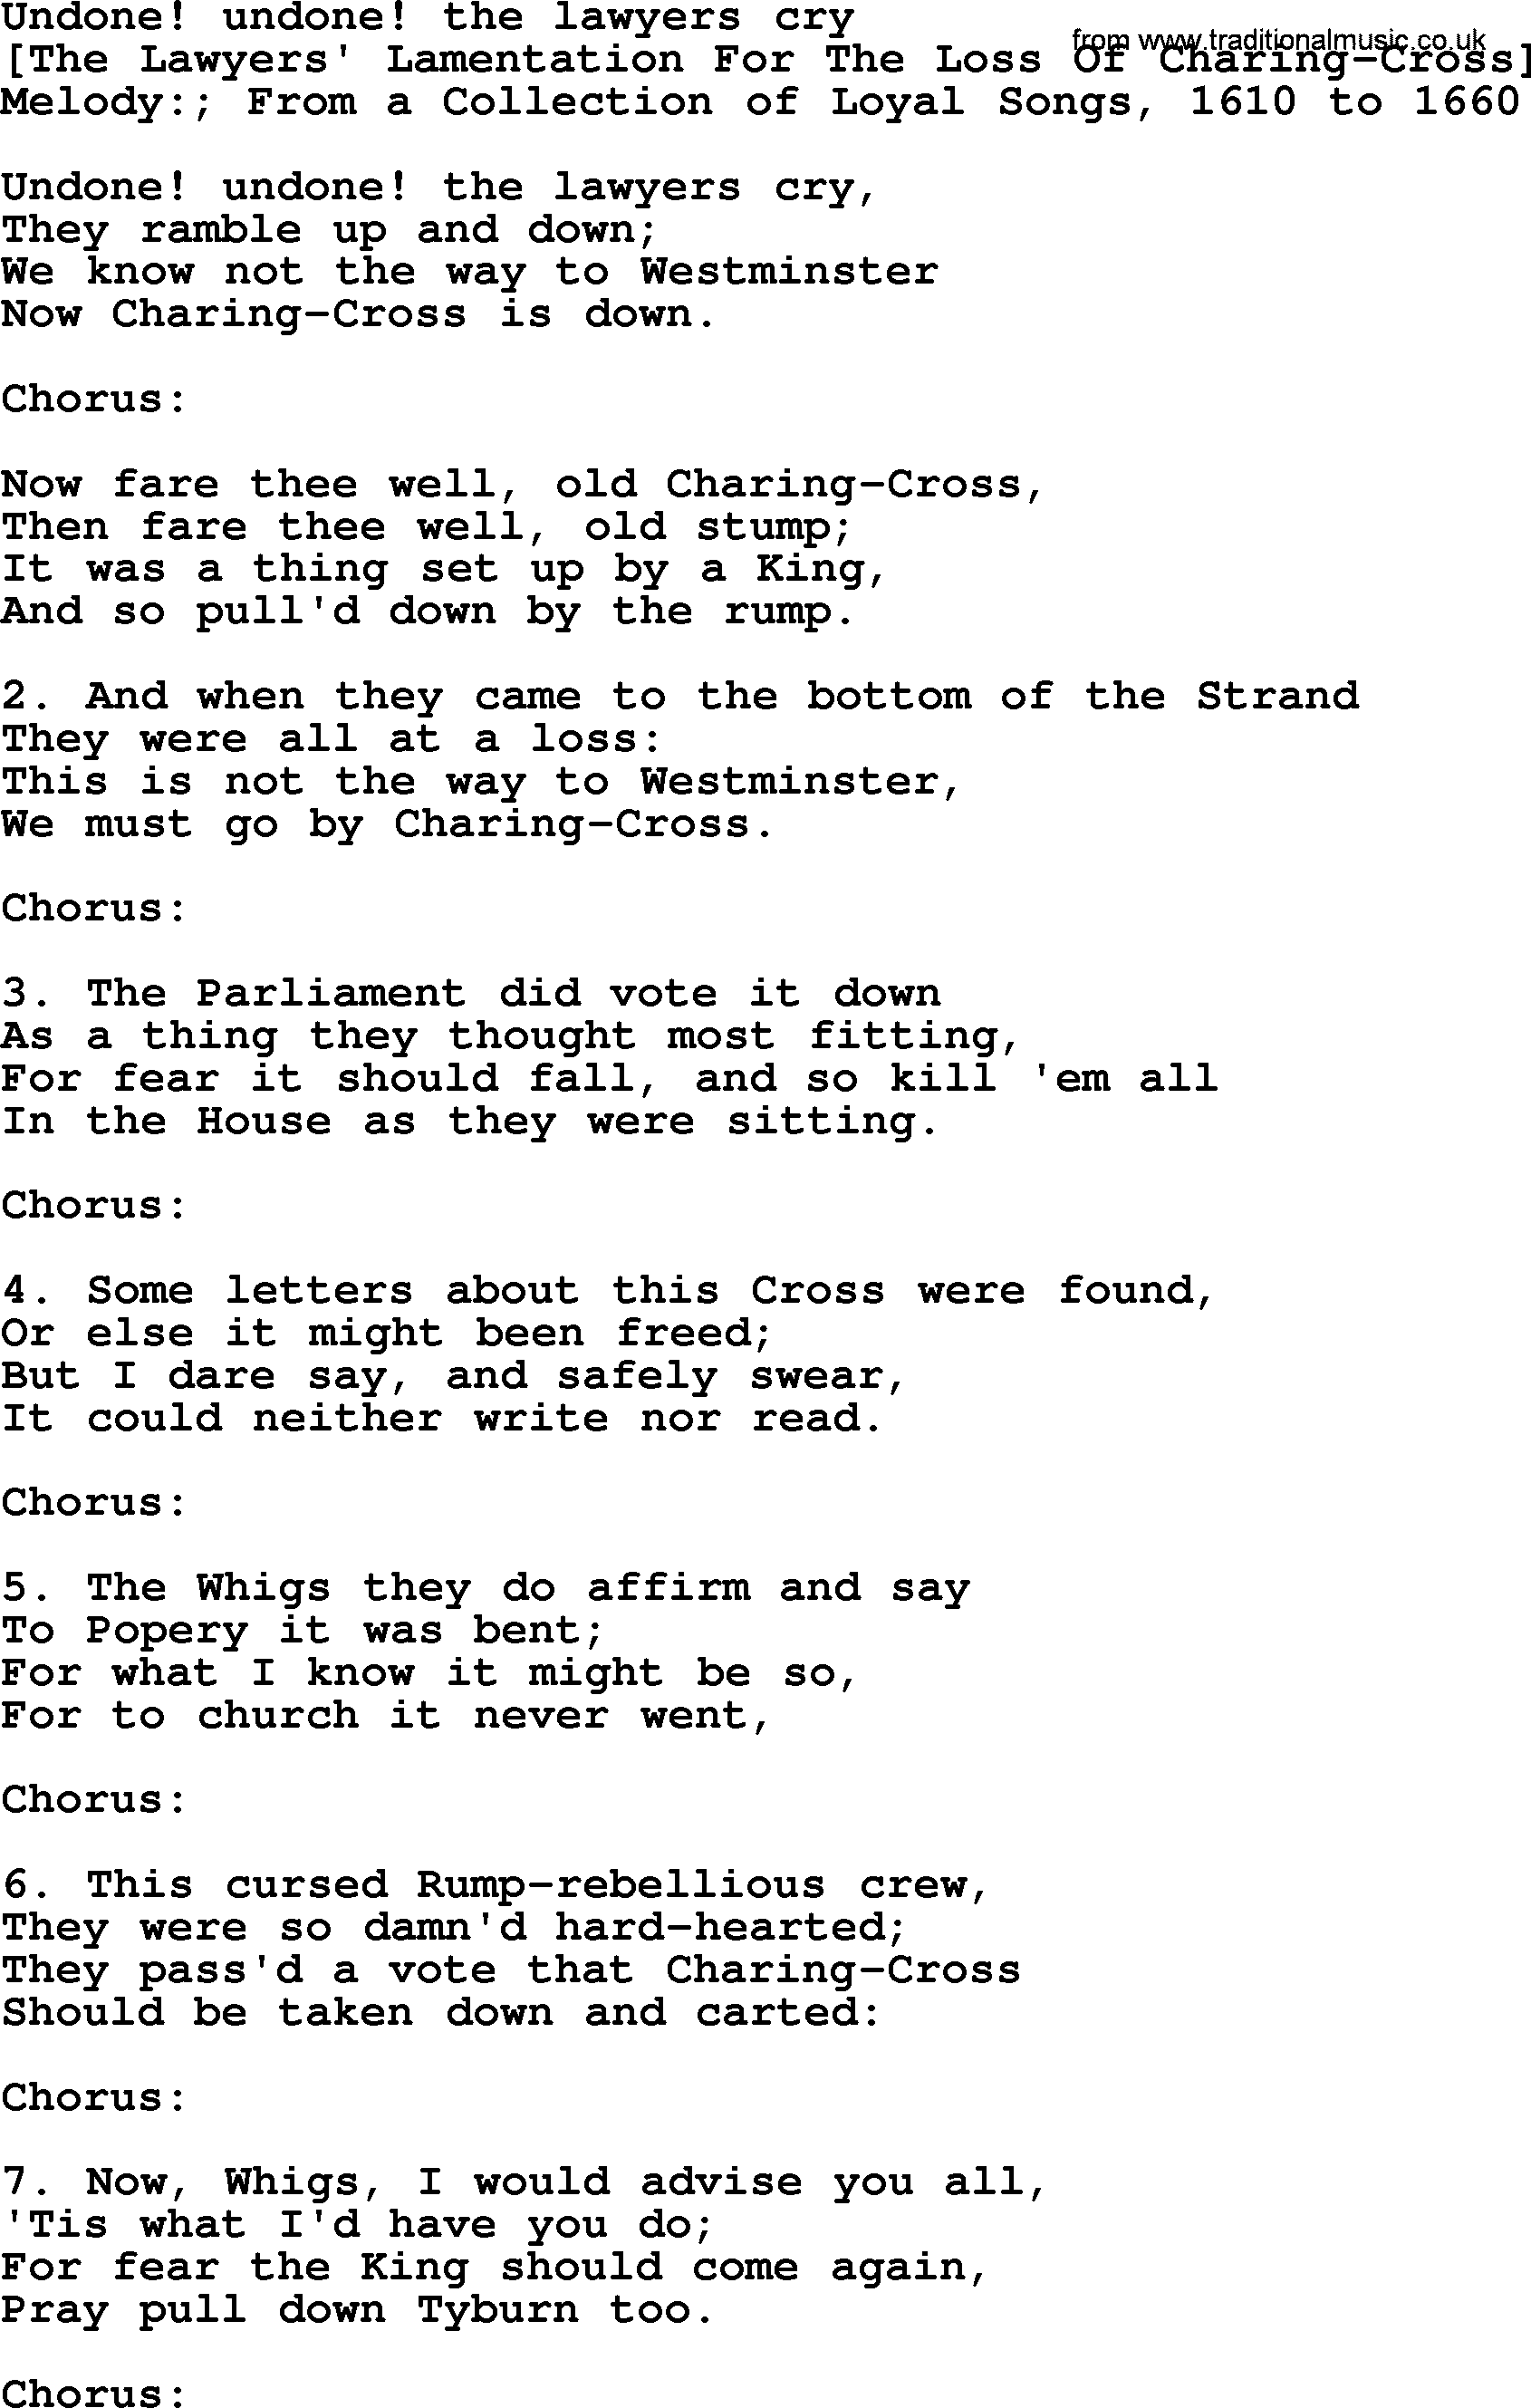 Old English Song: Undone! Undone! The Lawyers Cry lyrics